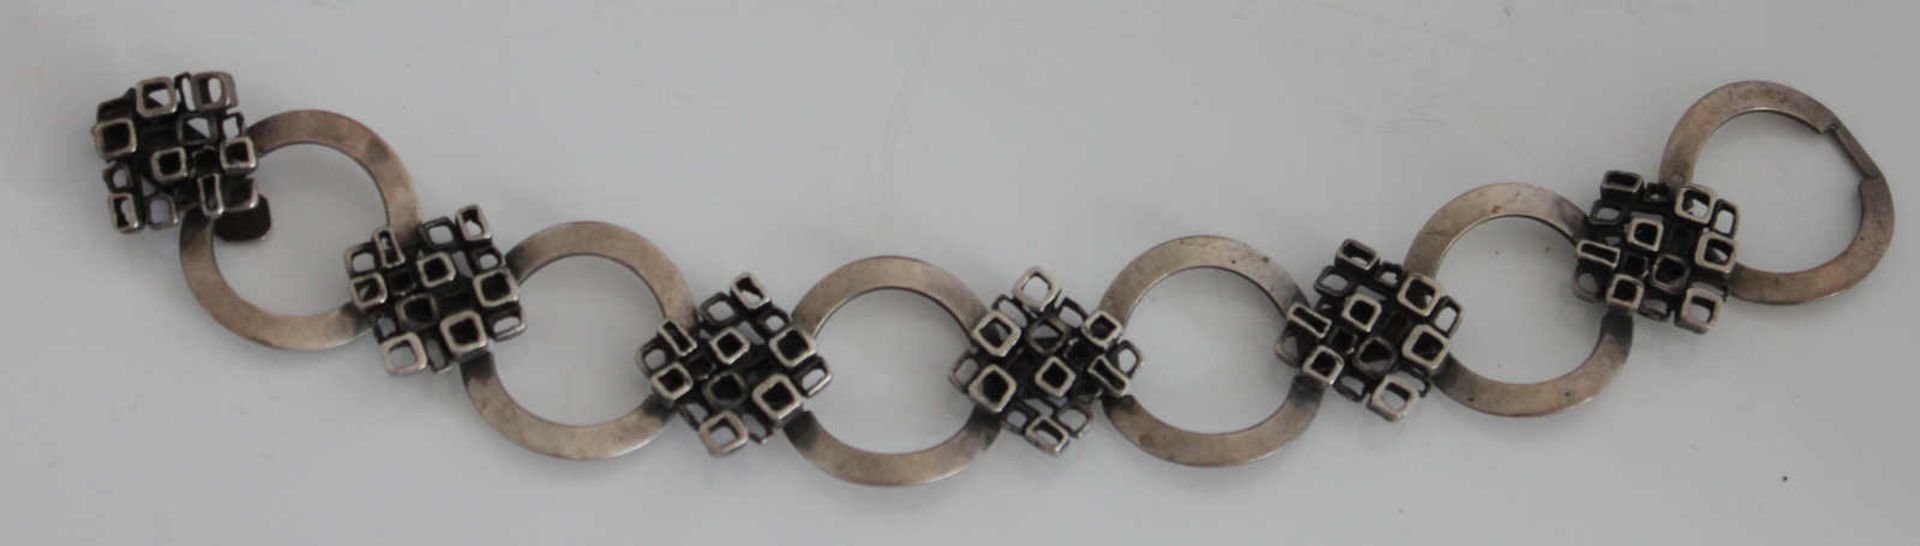 Armband, 835er Silber, Handarbeit, Länge ca. 19,5 cm, Gewicht ca. 26,6 grMindestpreis: 20 EUR